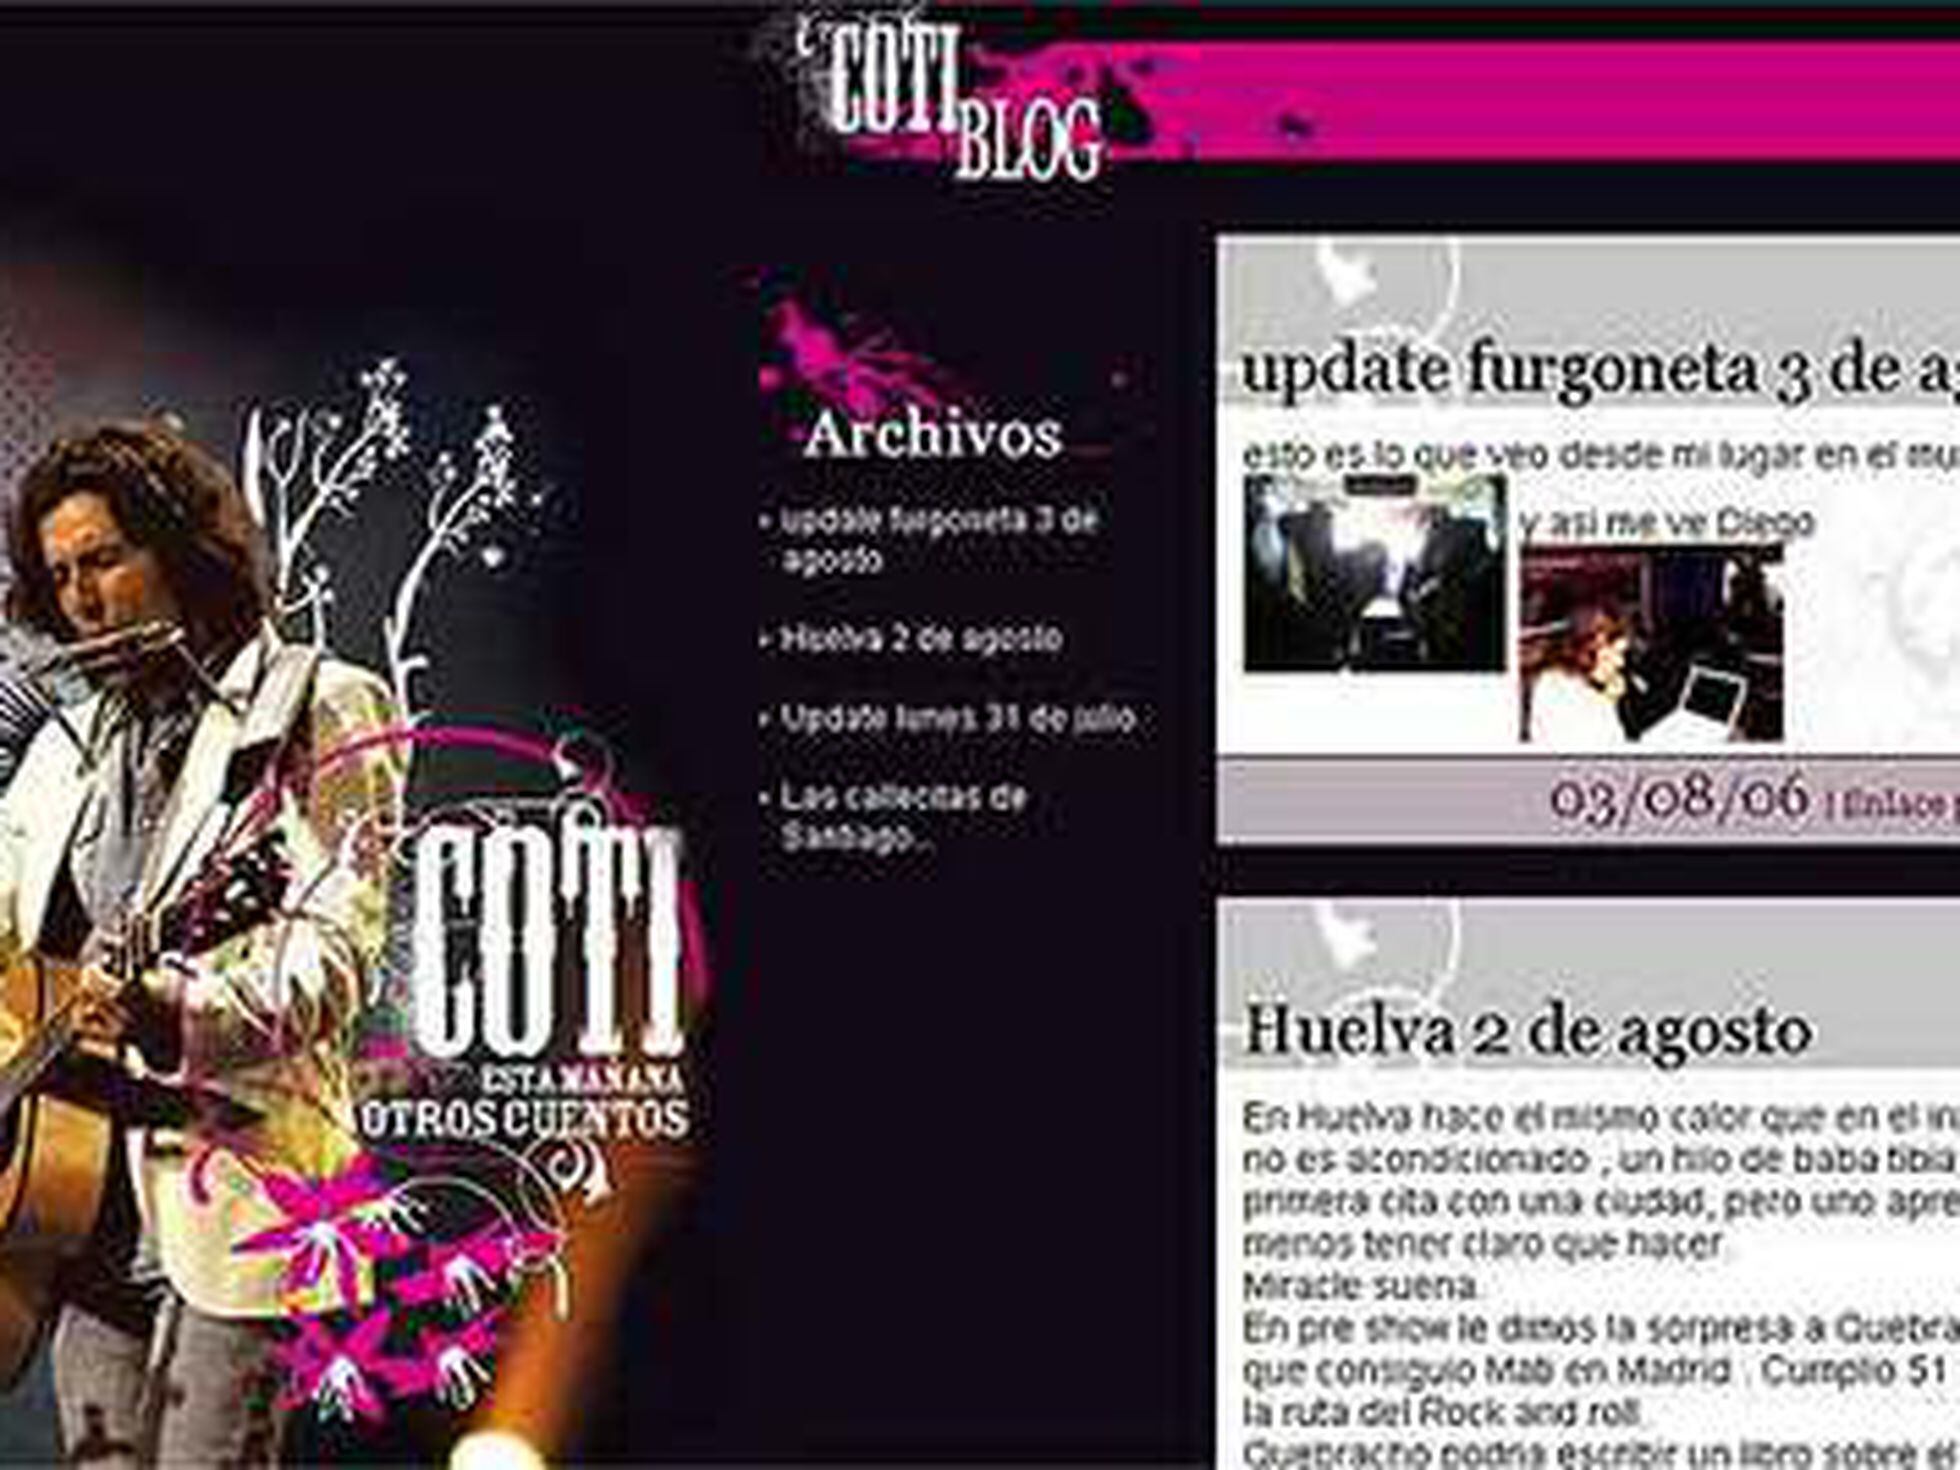  estrena blogs de La Oreja de Van Gogh, Coti y Ana Torroja |  Cultura | EL PAÍS